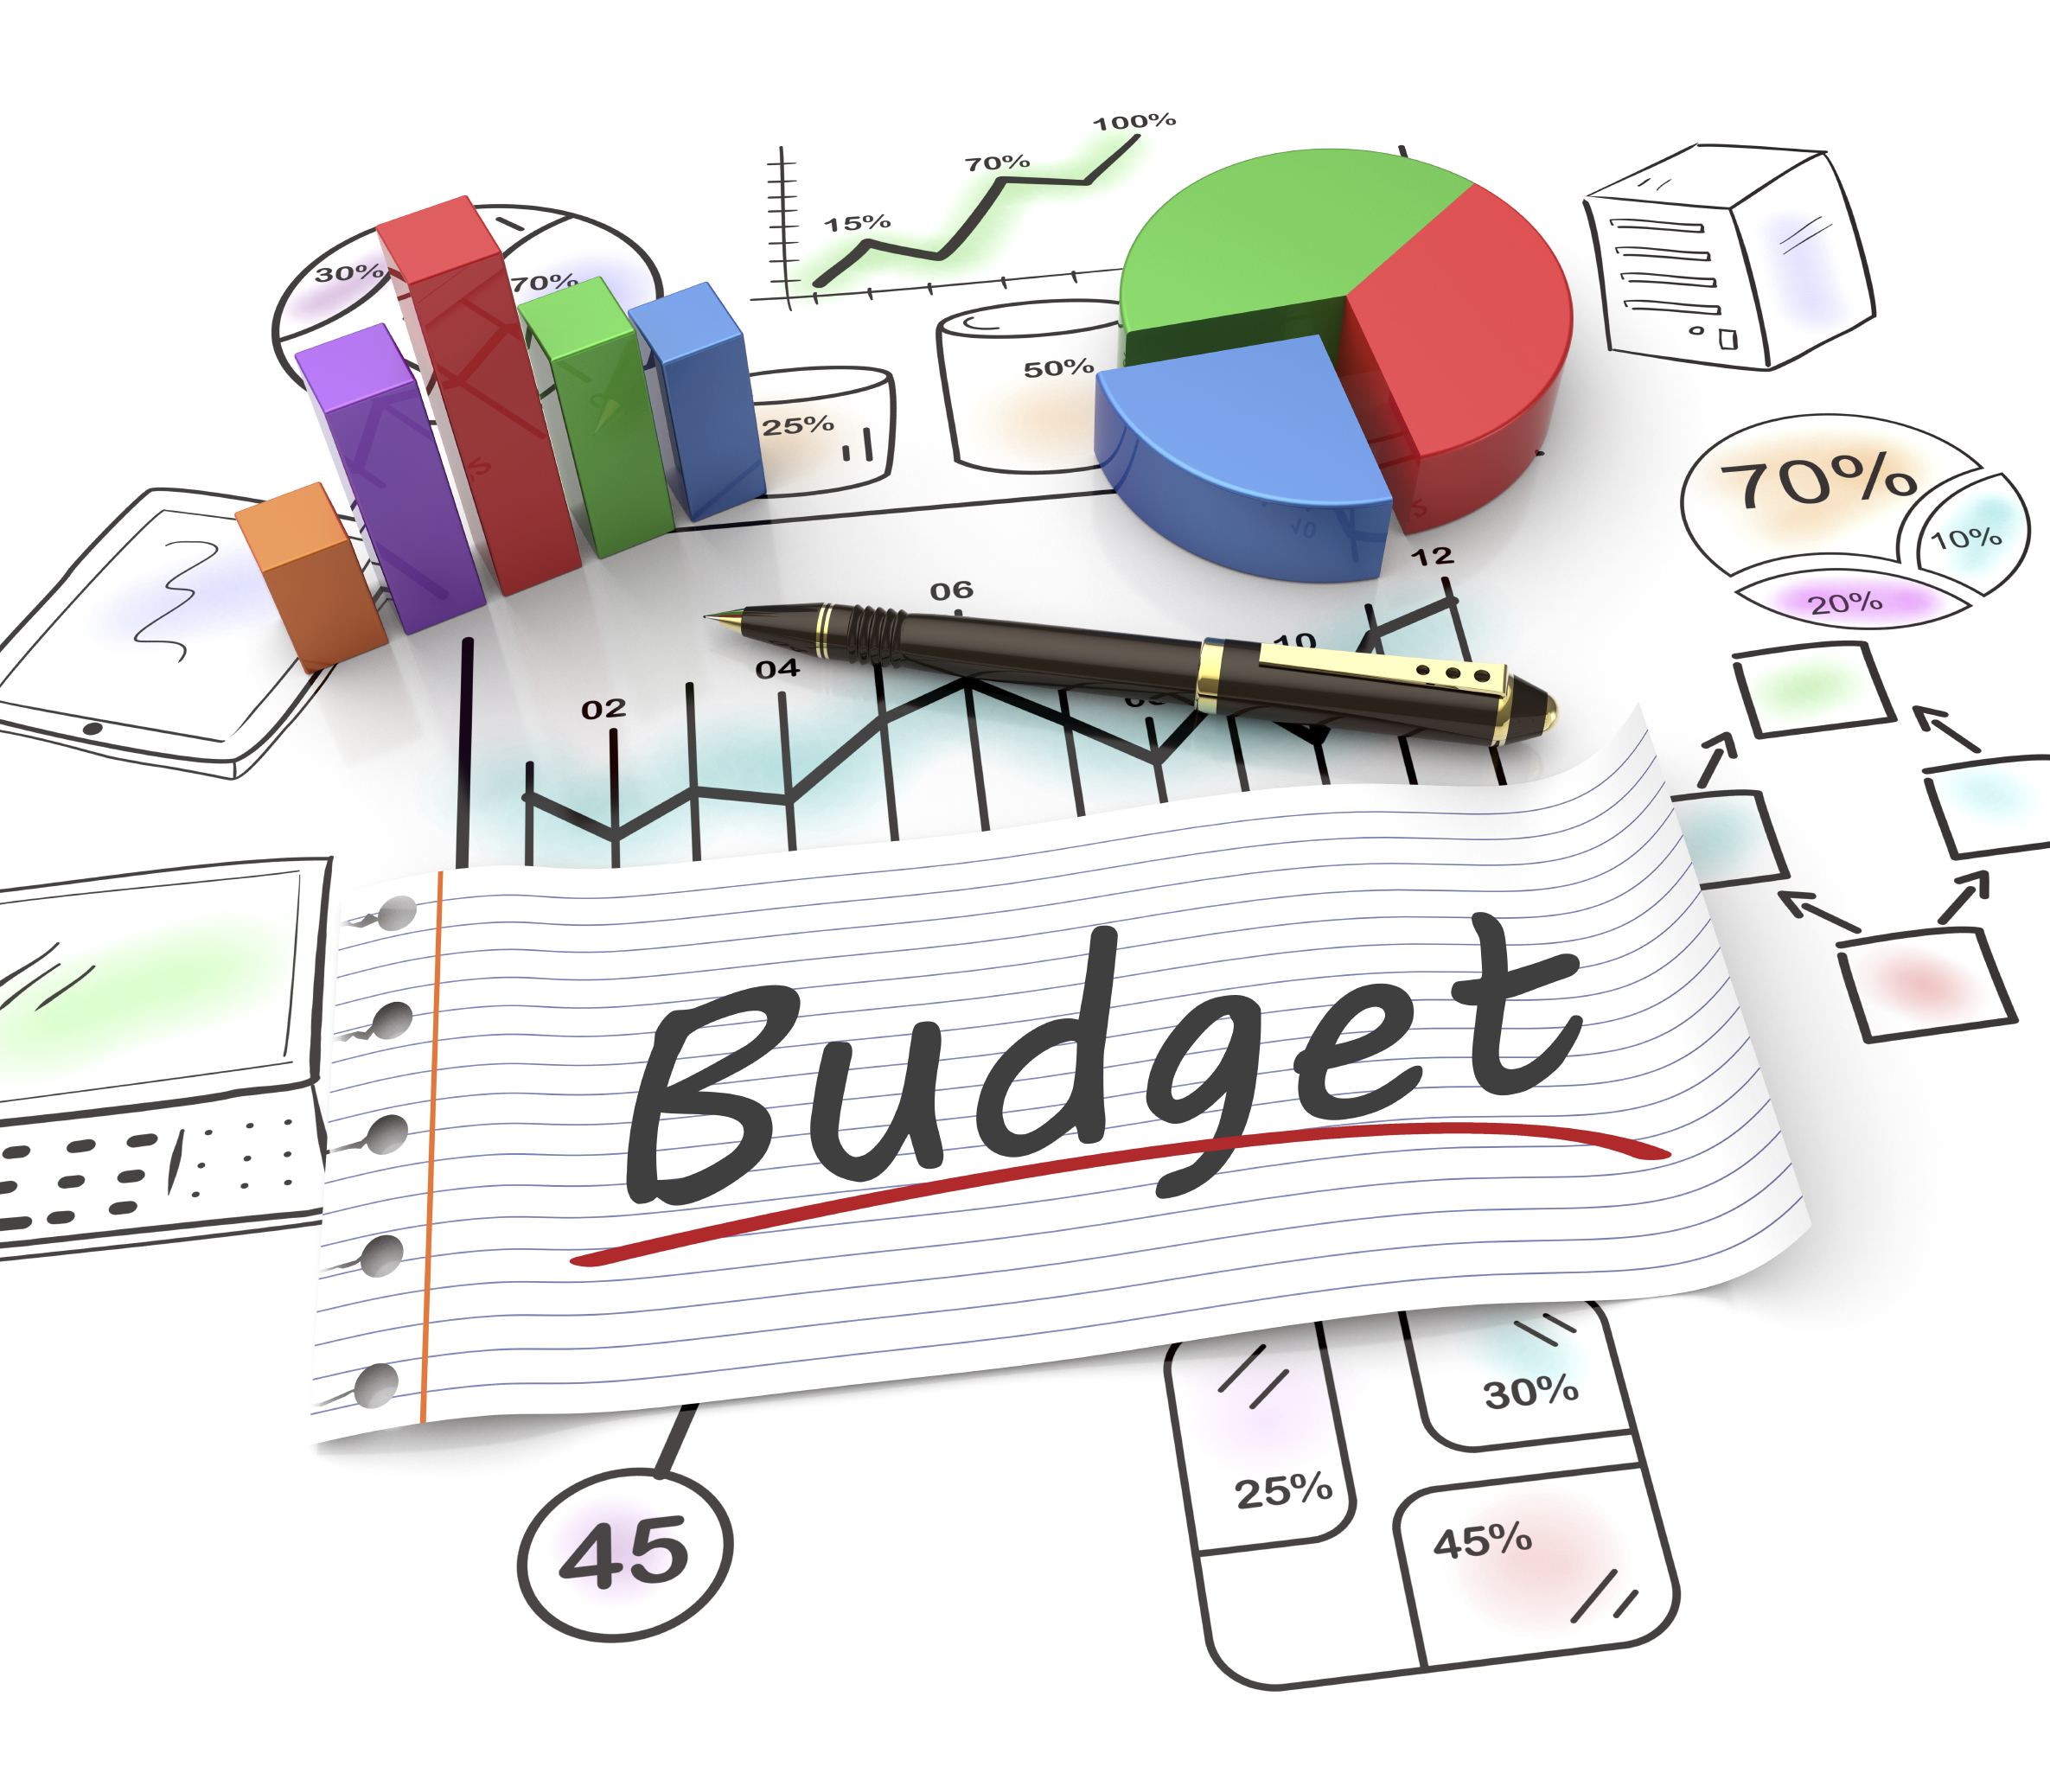 Drawbacks of traditional budgeting